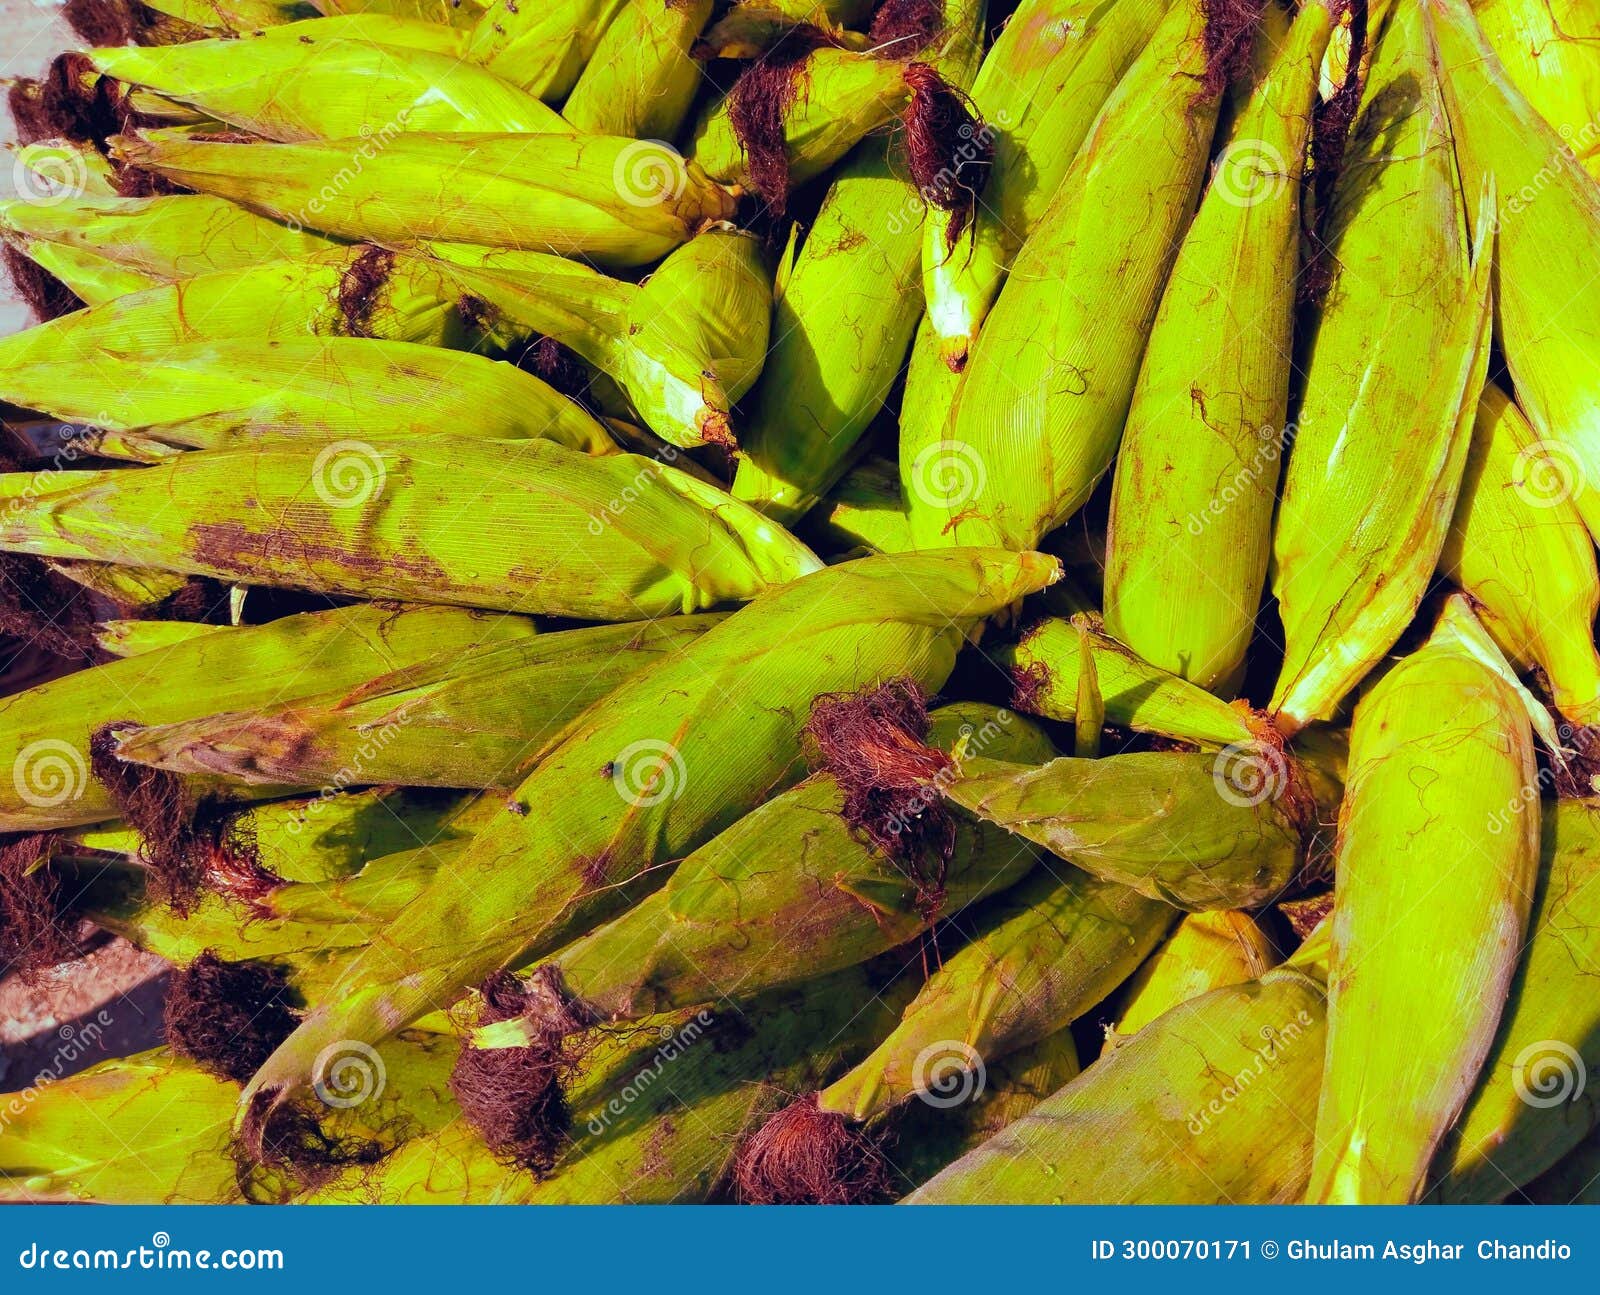 green maize cobs sweet corn on the cob yellow whole ear-maize organic ear-corn  mazorca maiz image espiga milho epi mais photo